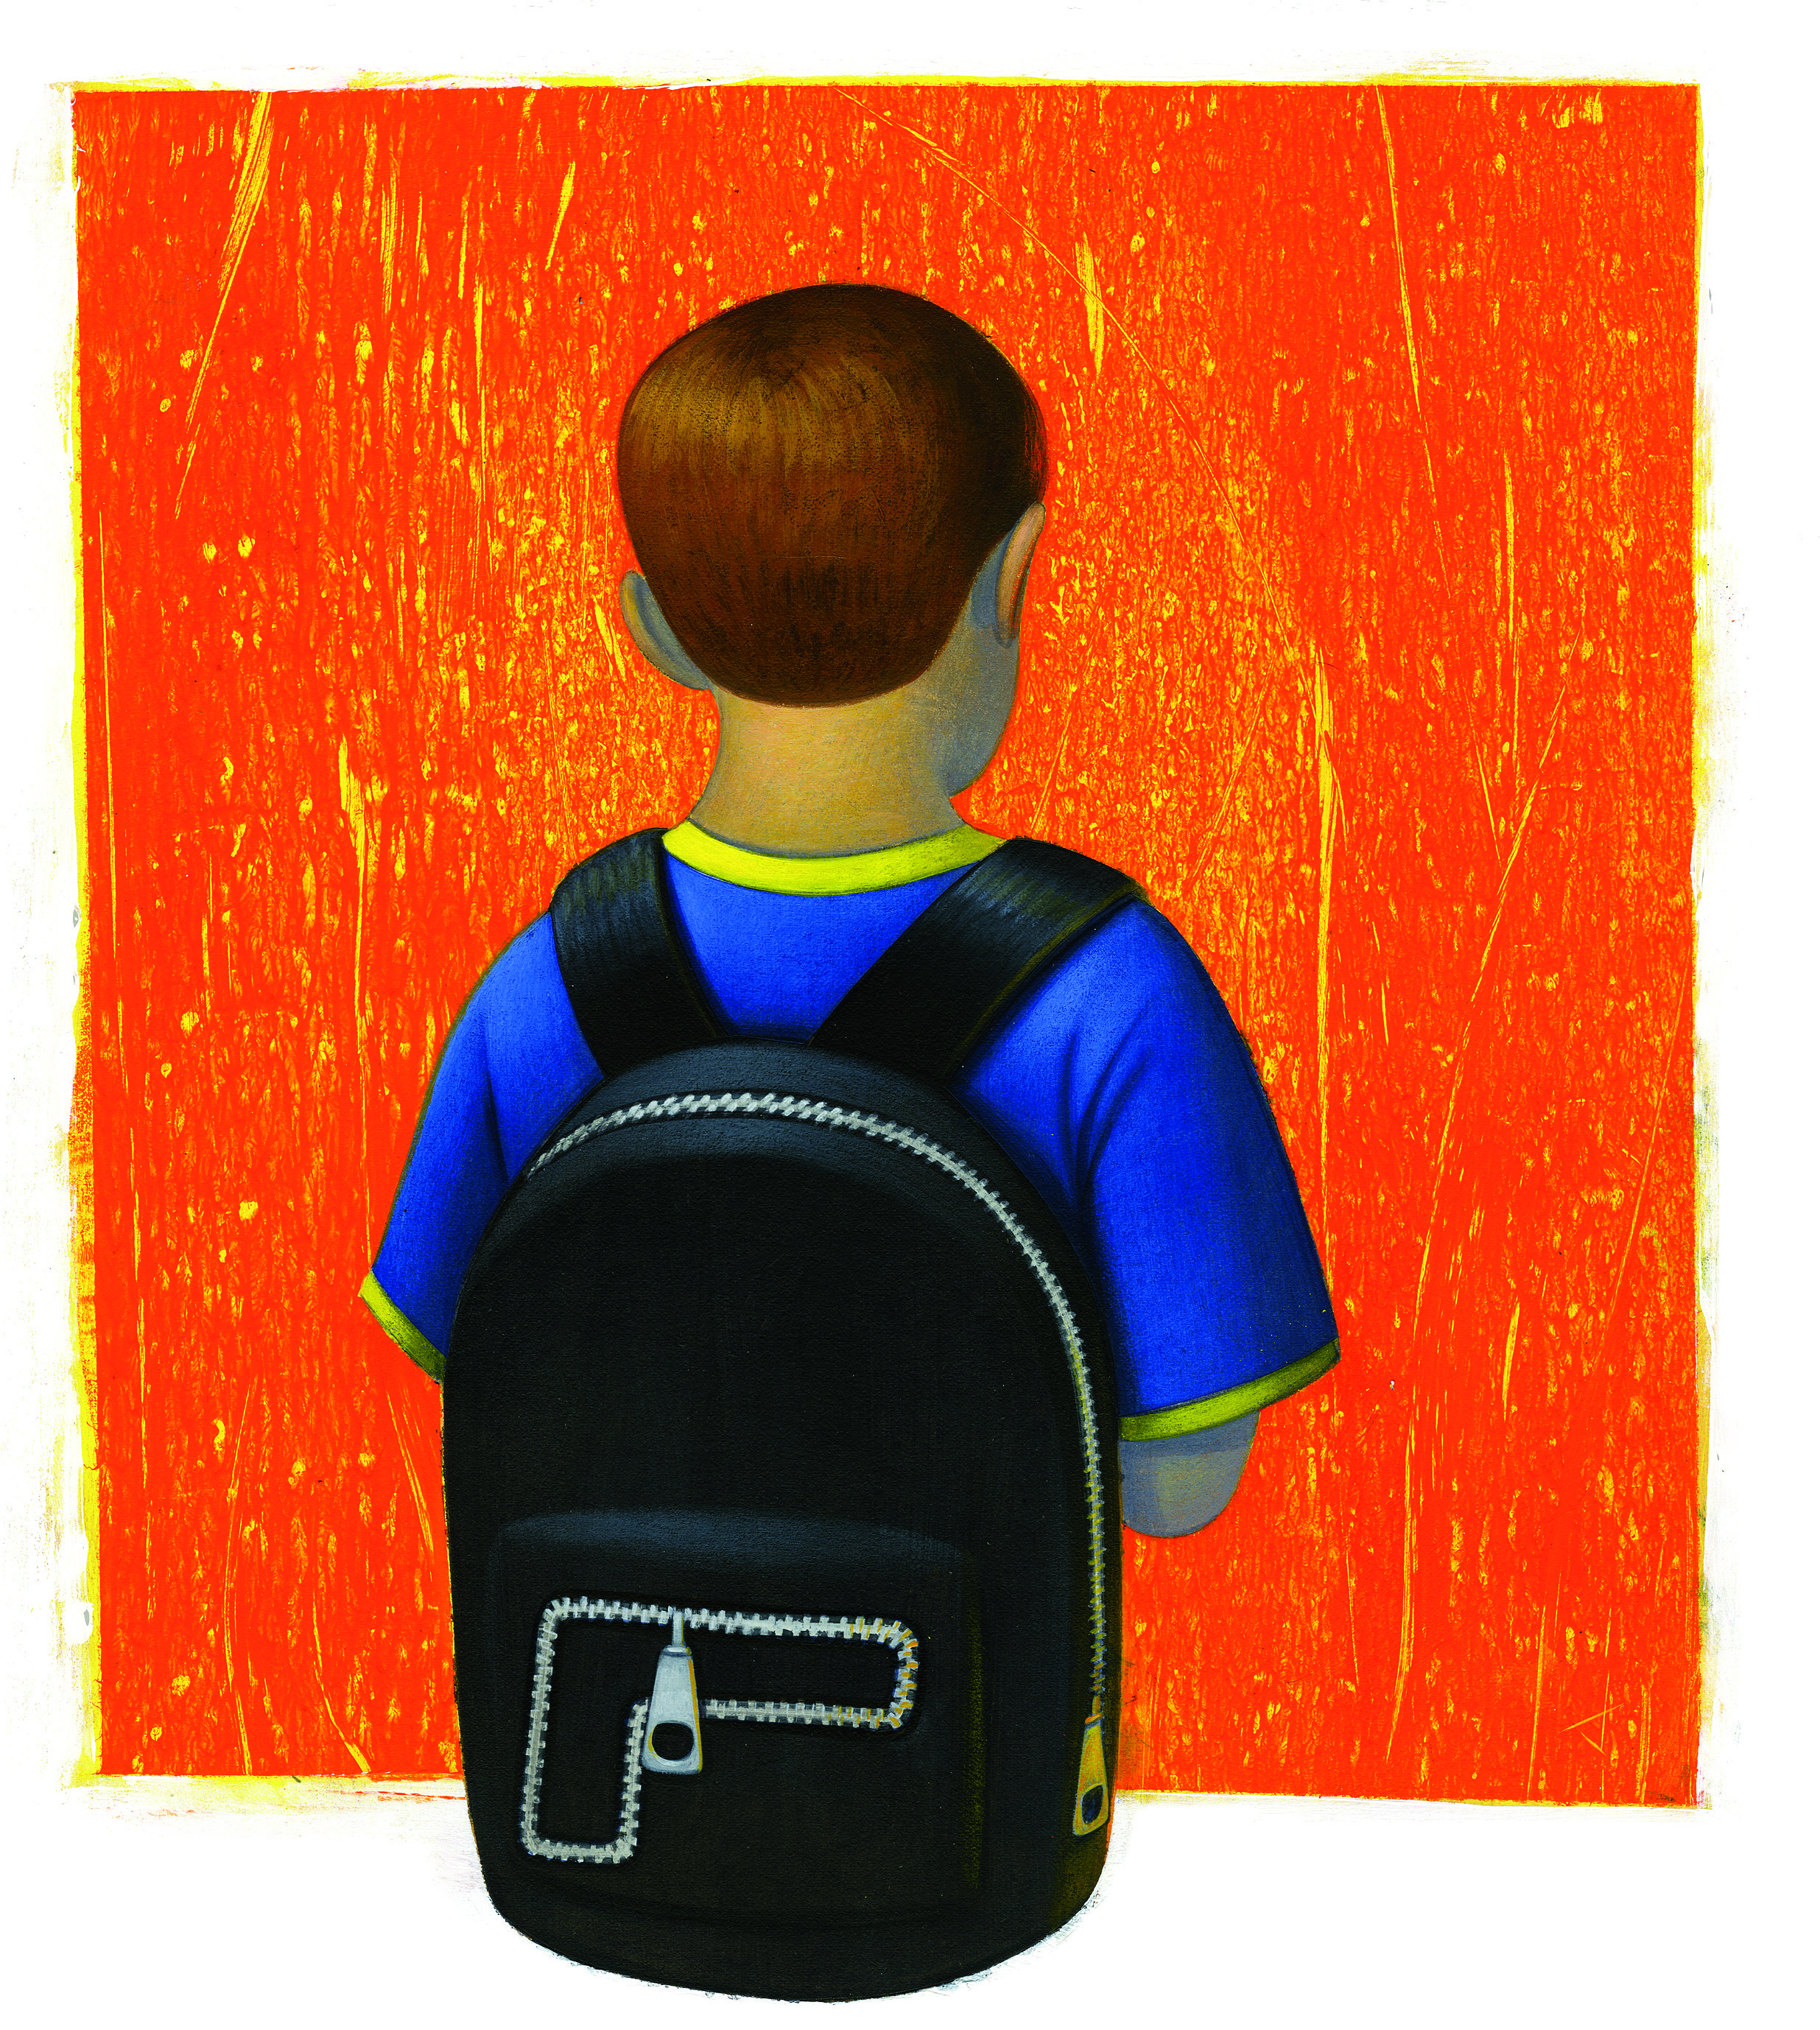 Illustration of gun backpack